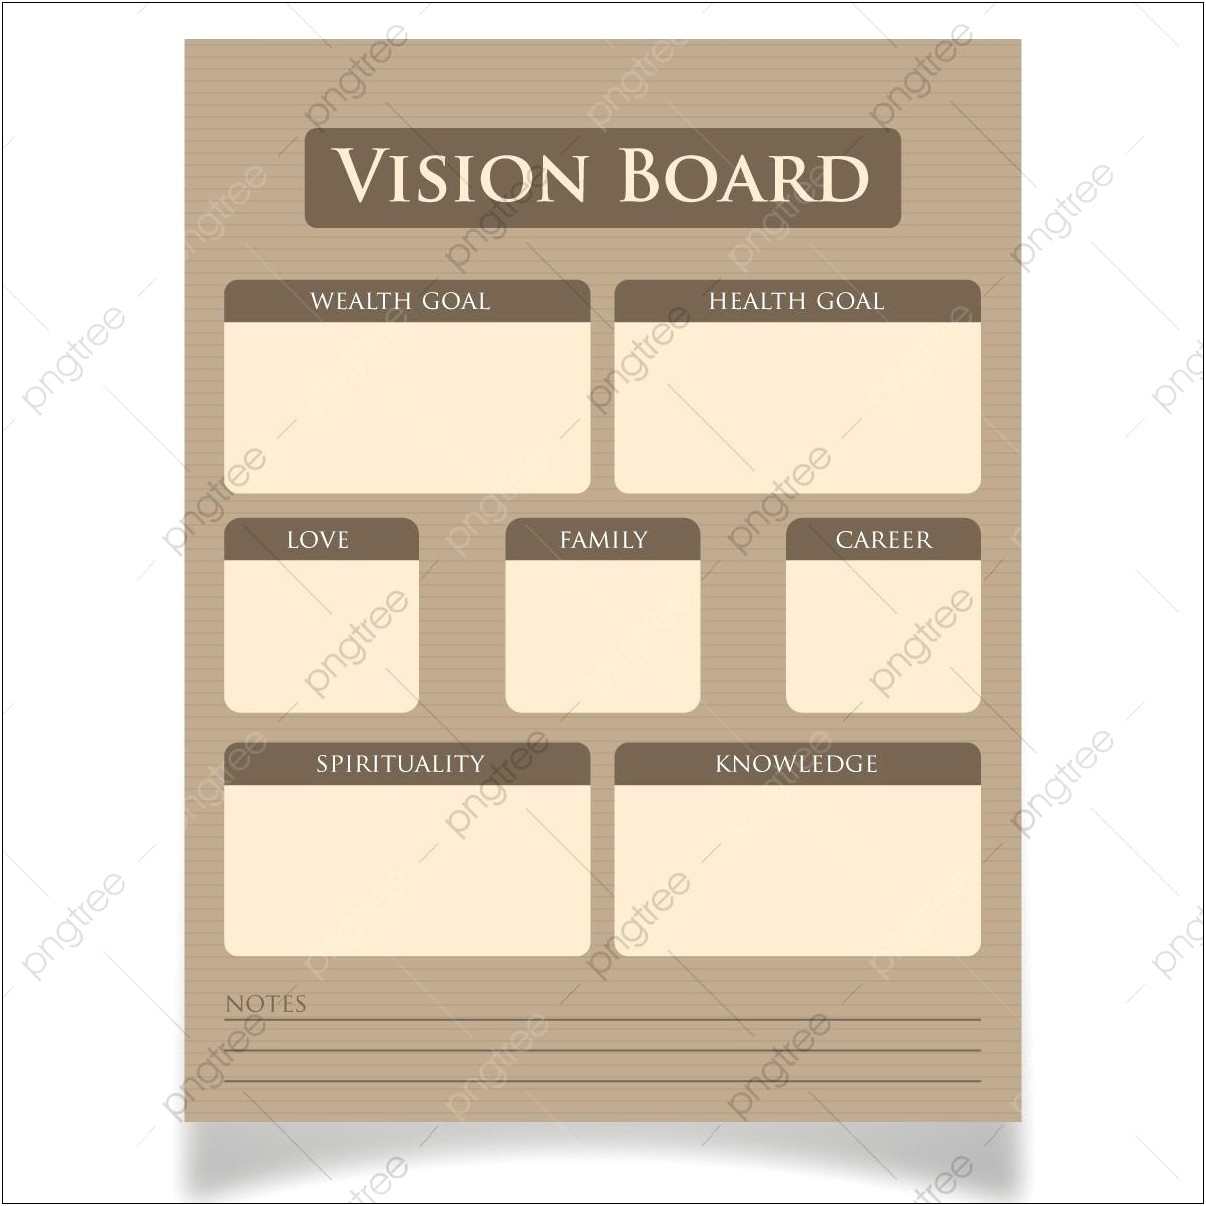 free-vision-board-party-invitation-template-templates-resume-designs-eyjlb45v0v